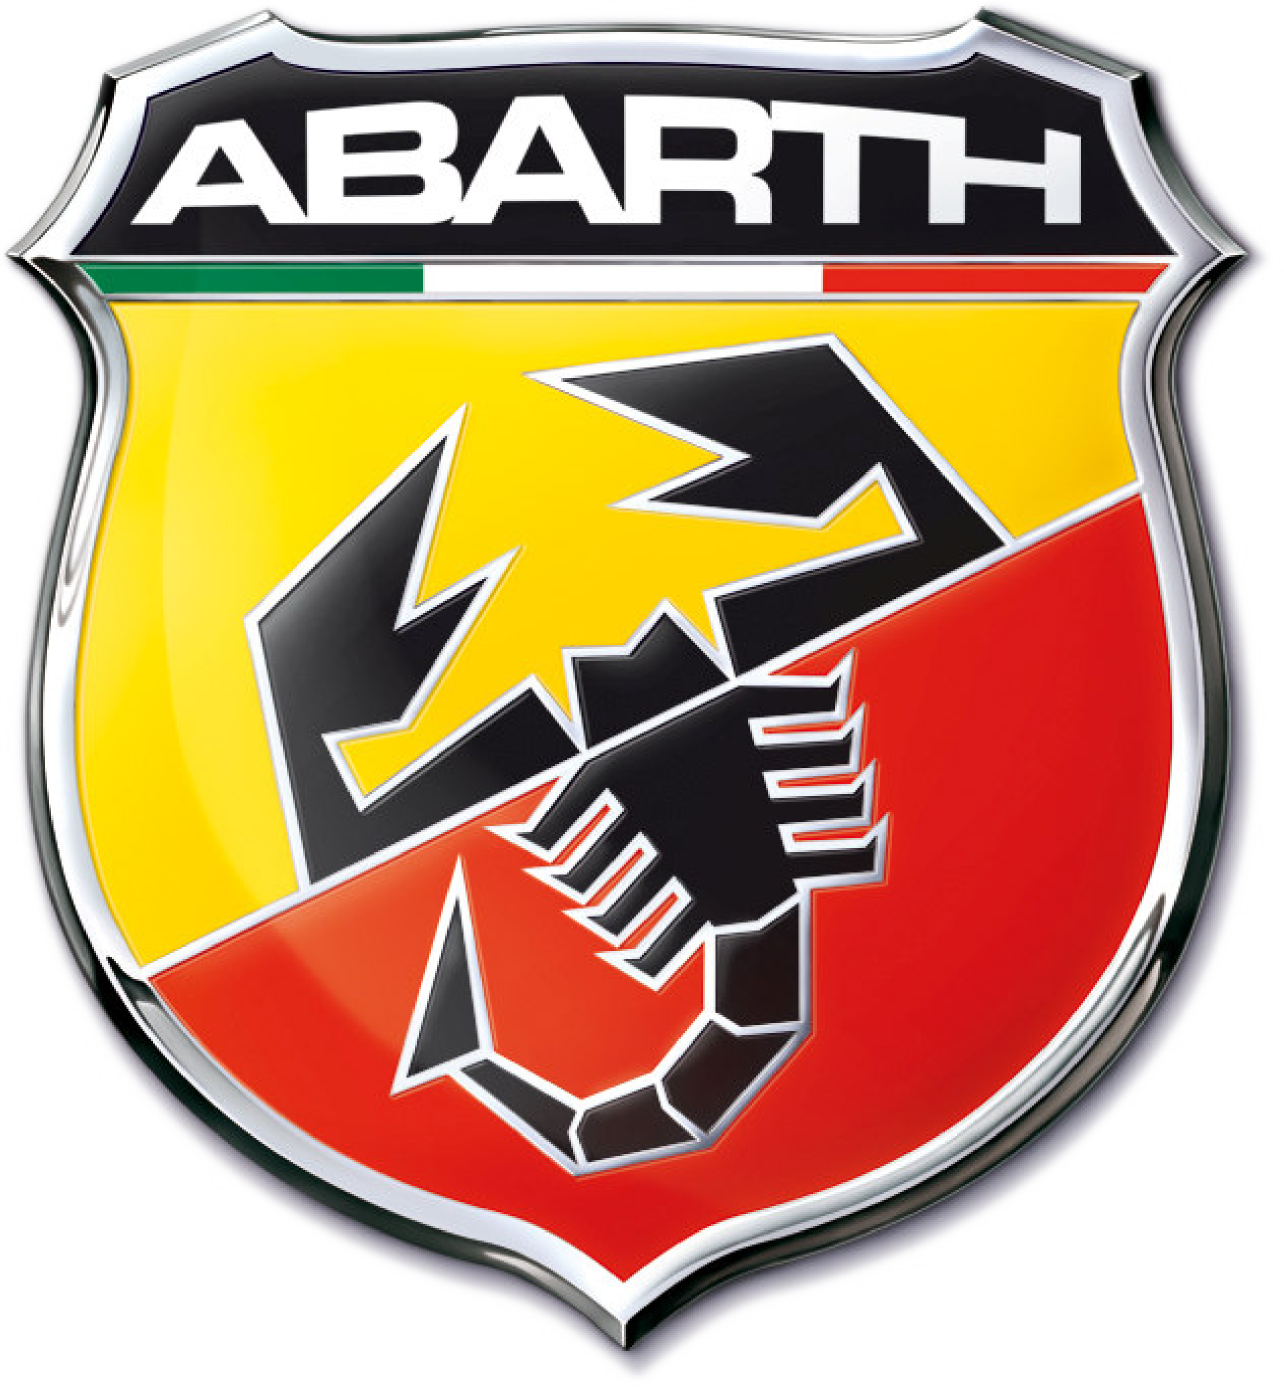 http://upload.wikimedia.org/wikipedia/de/3/3c/Abarth_logo.png